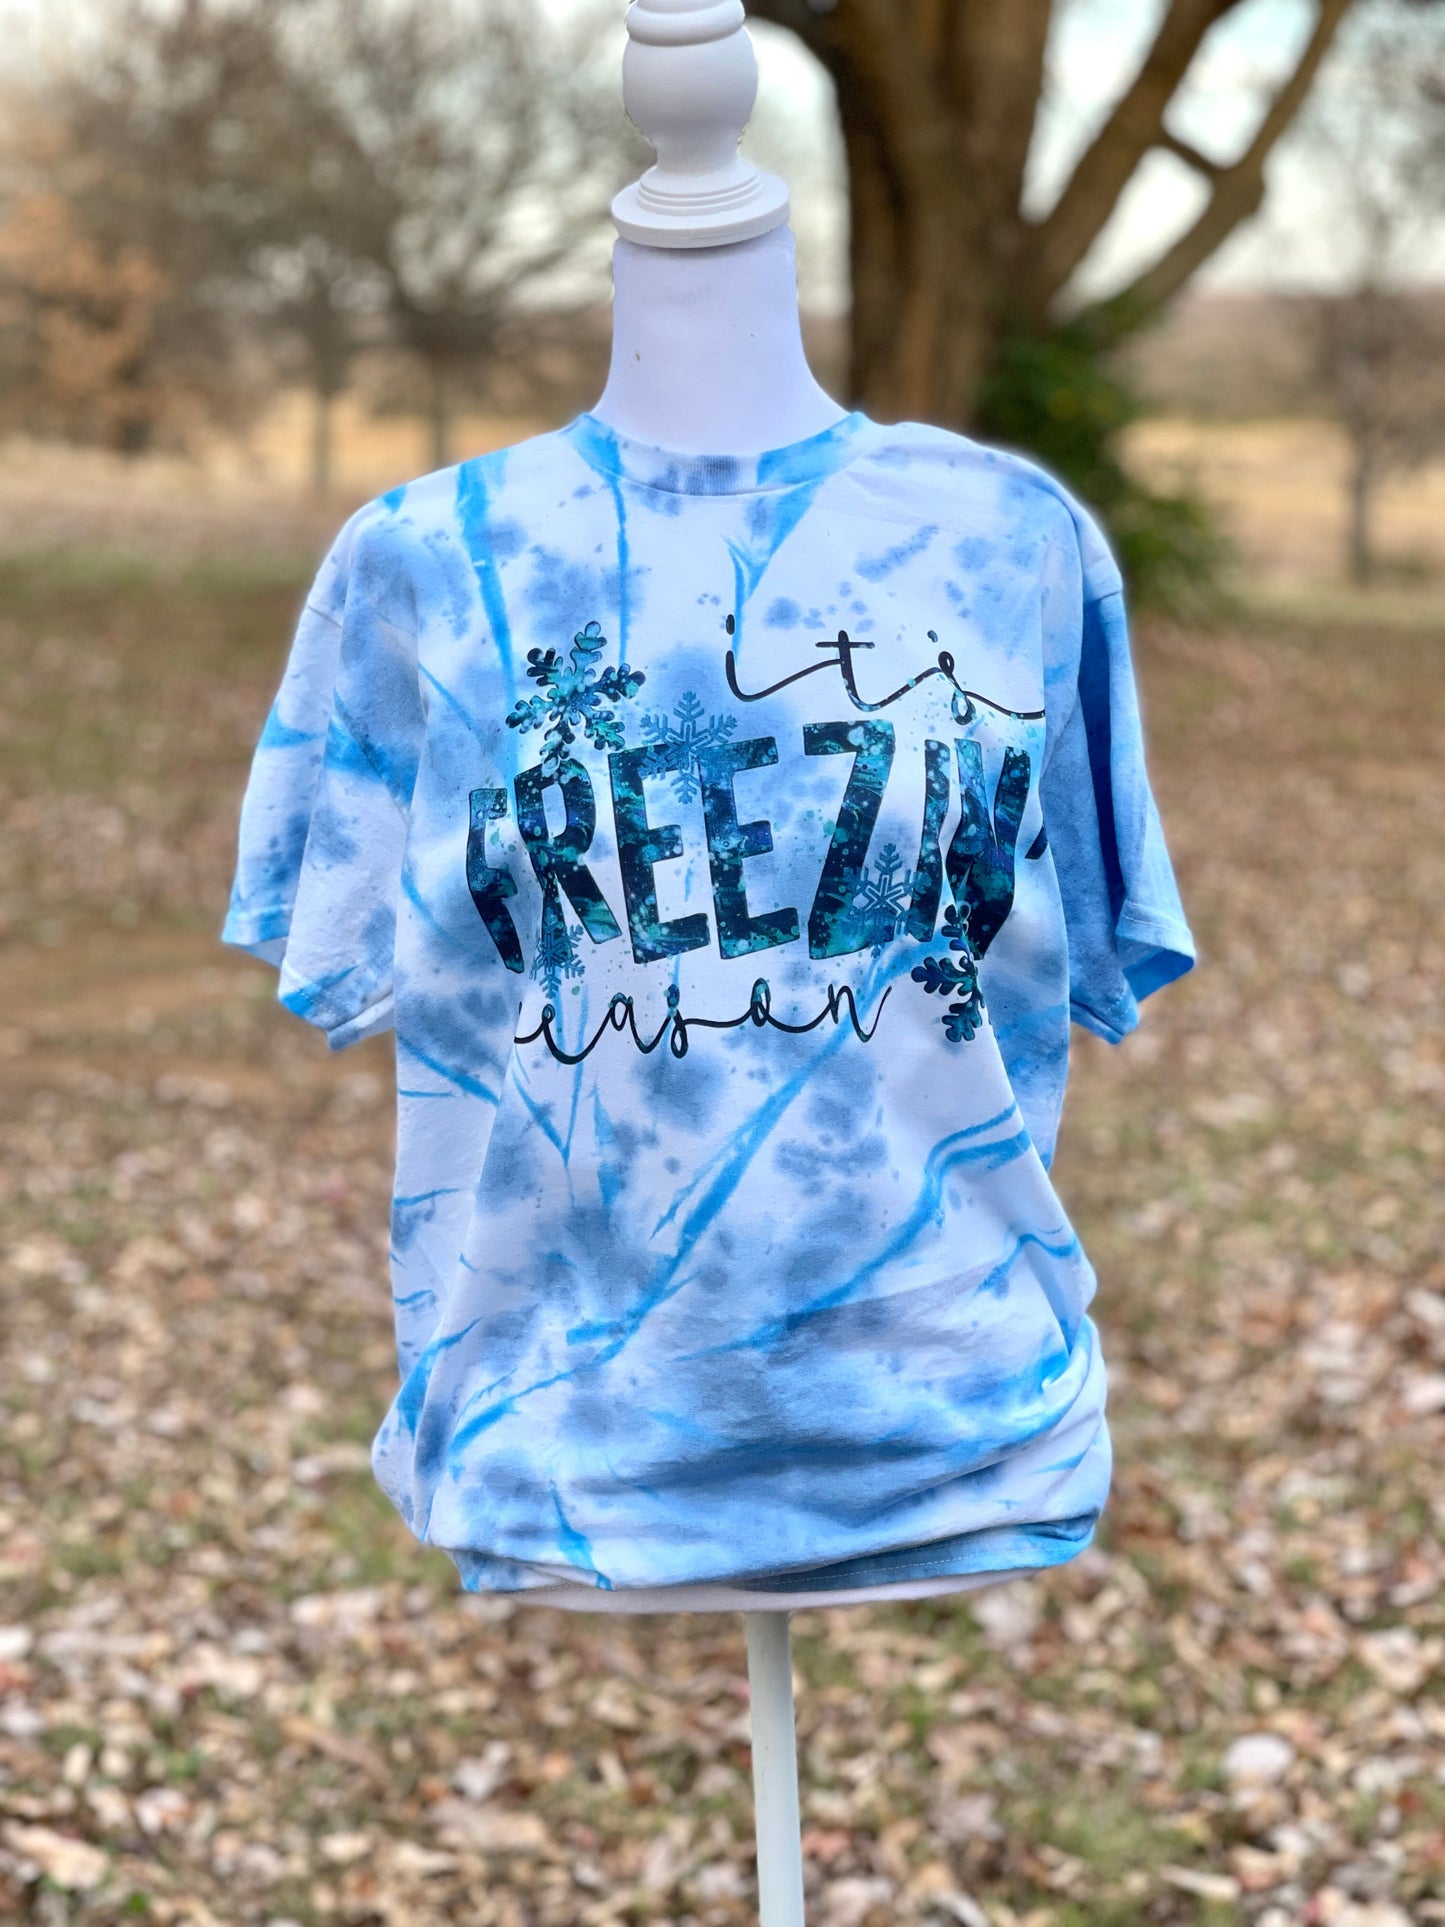 Freezin season Tshirt or Sweatshirt